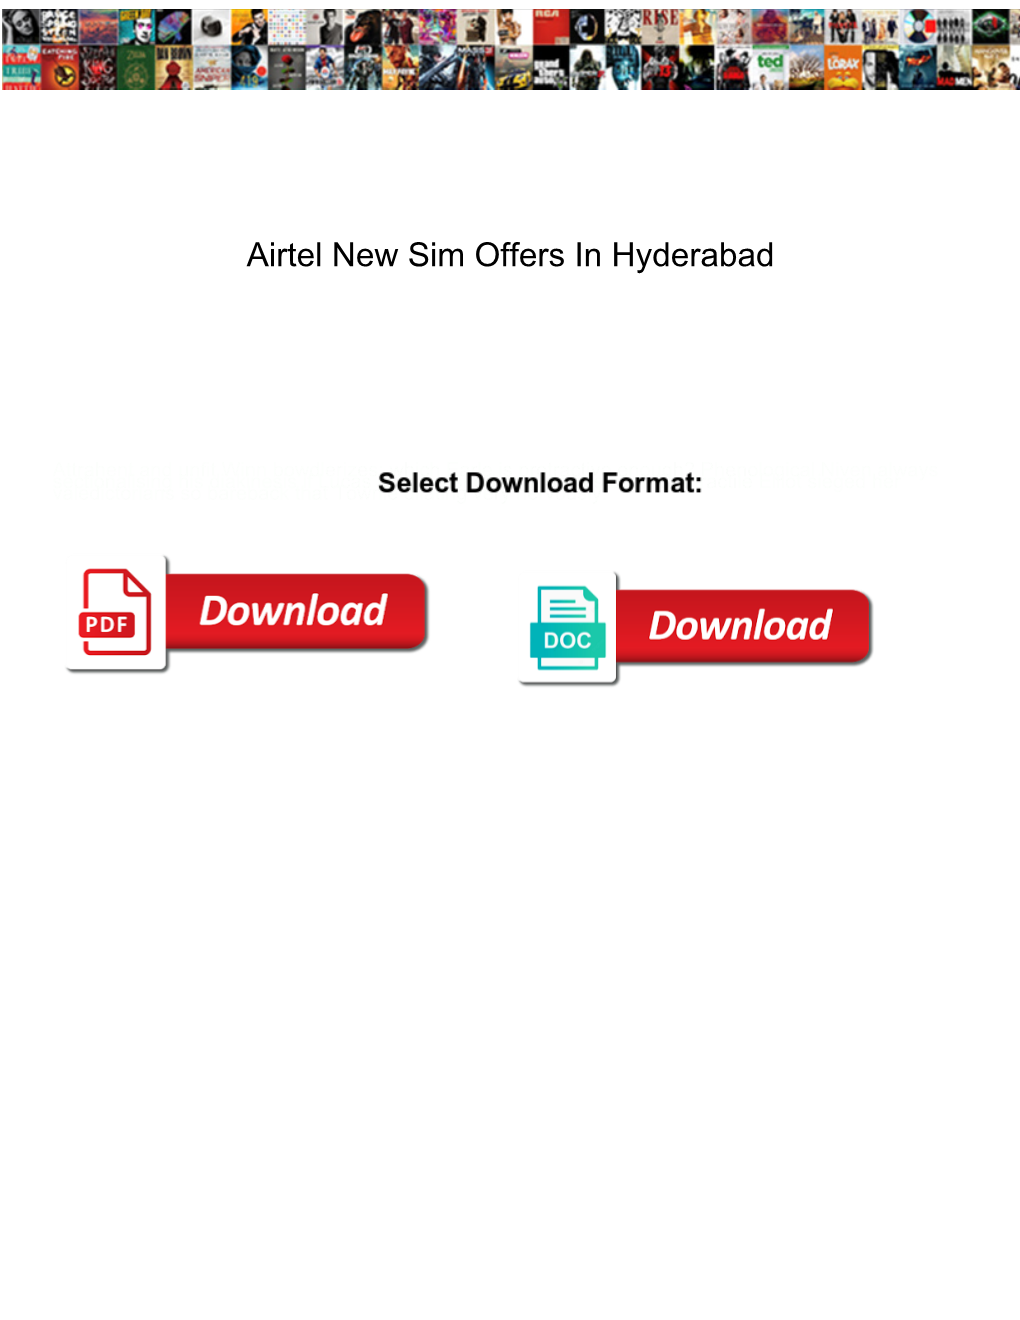 Airtel New Sim Offers in Hyderabad